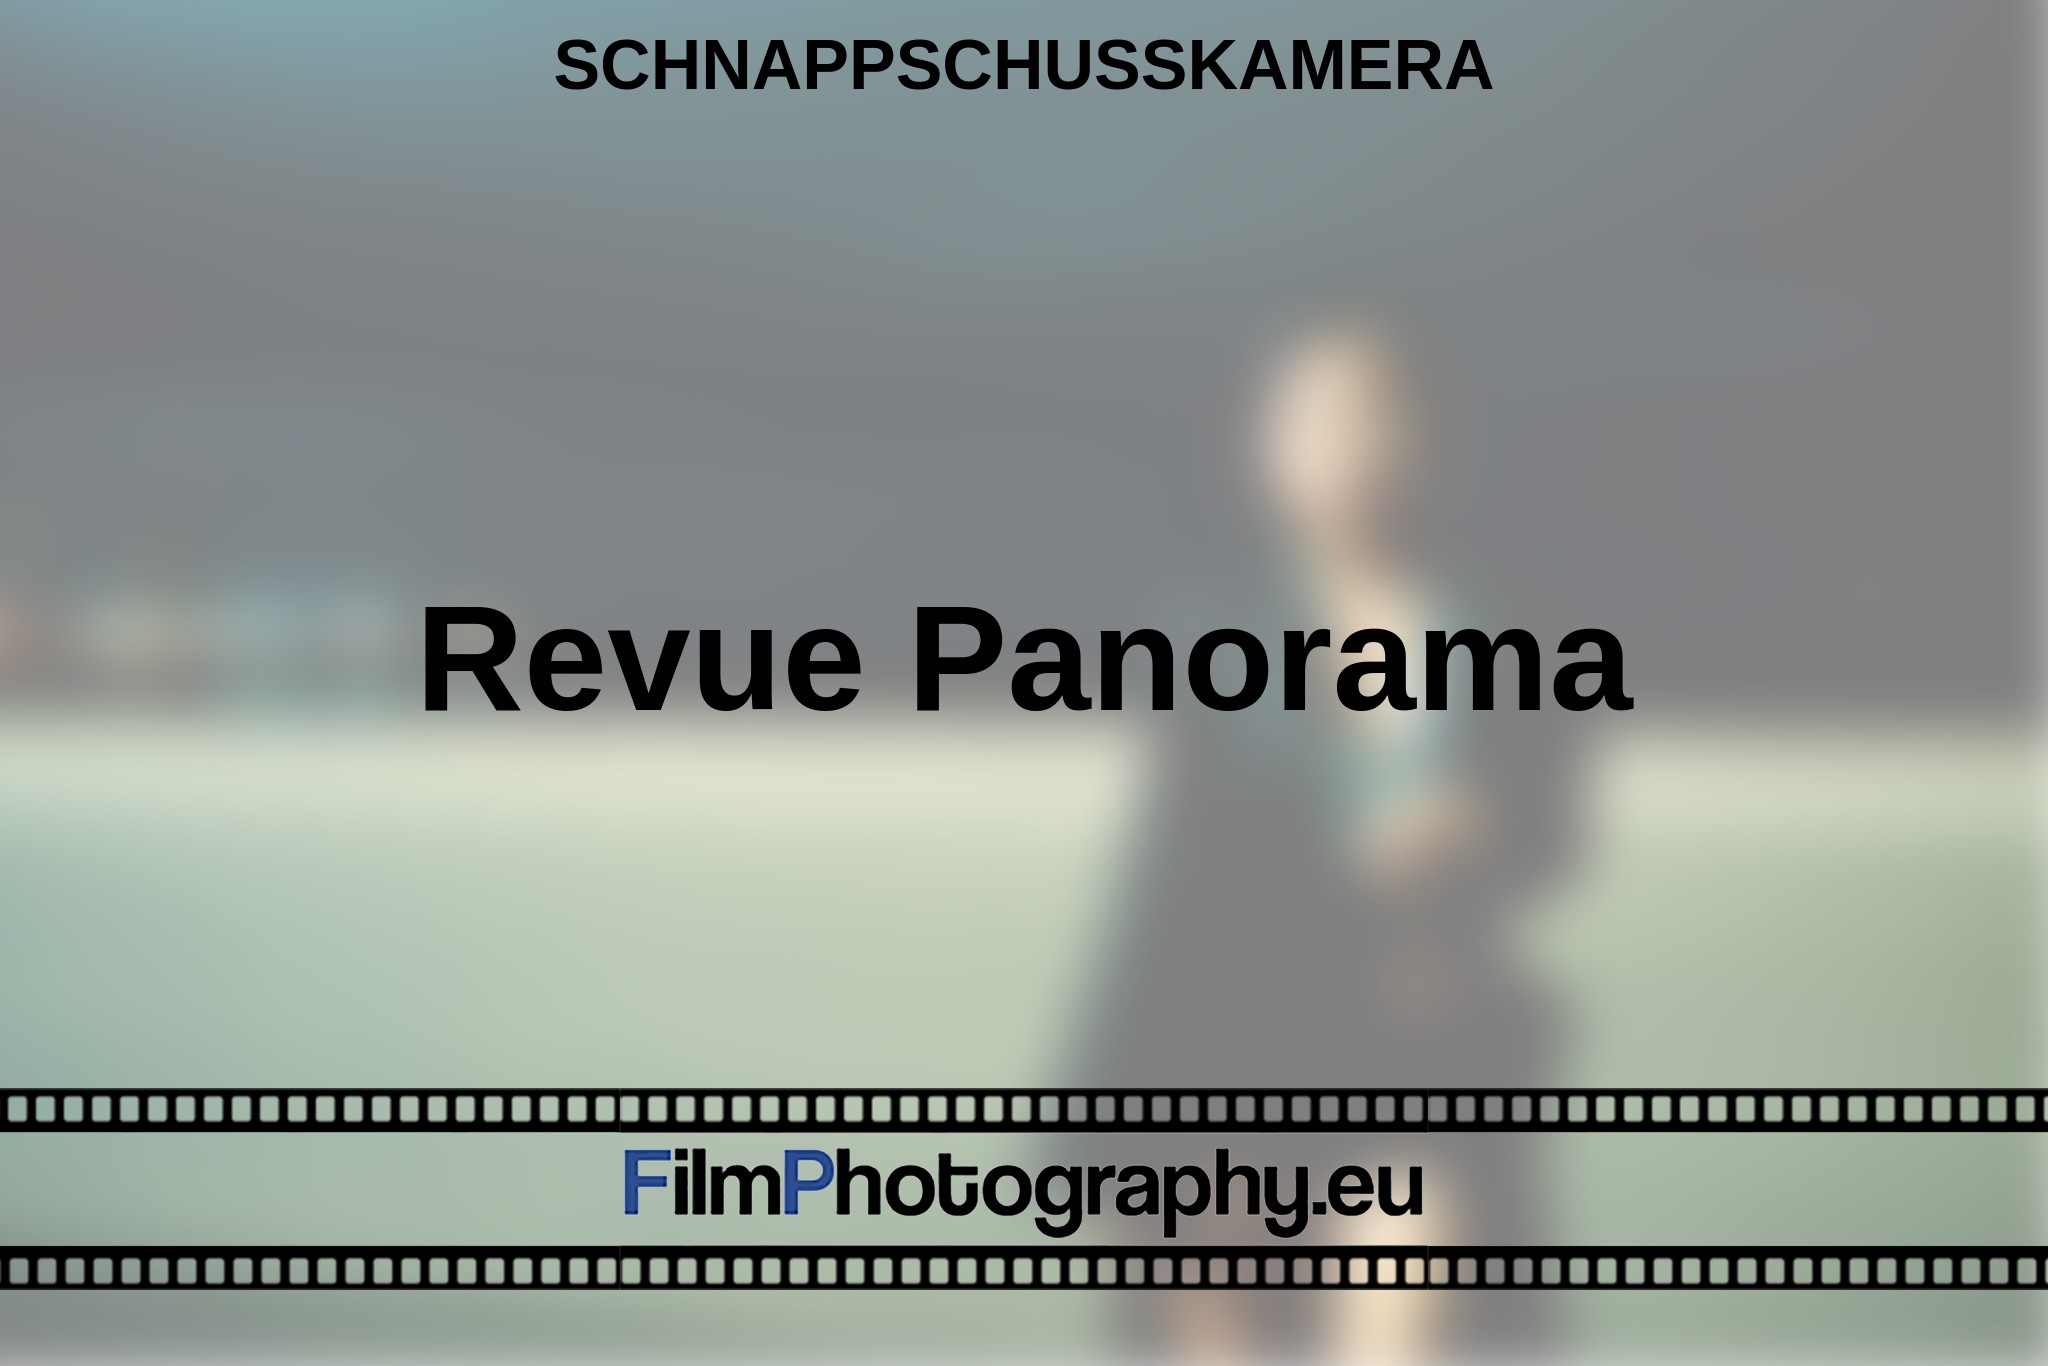 revue-panorama-schnappschusskamera-bnv.jpg